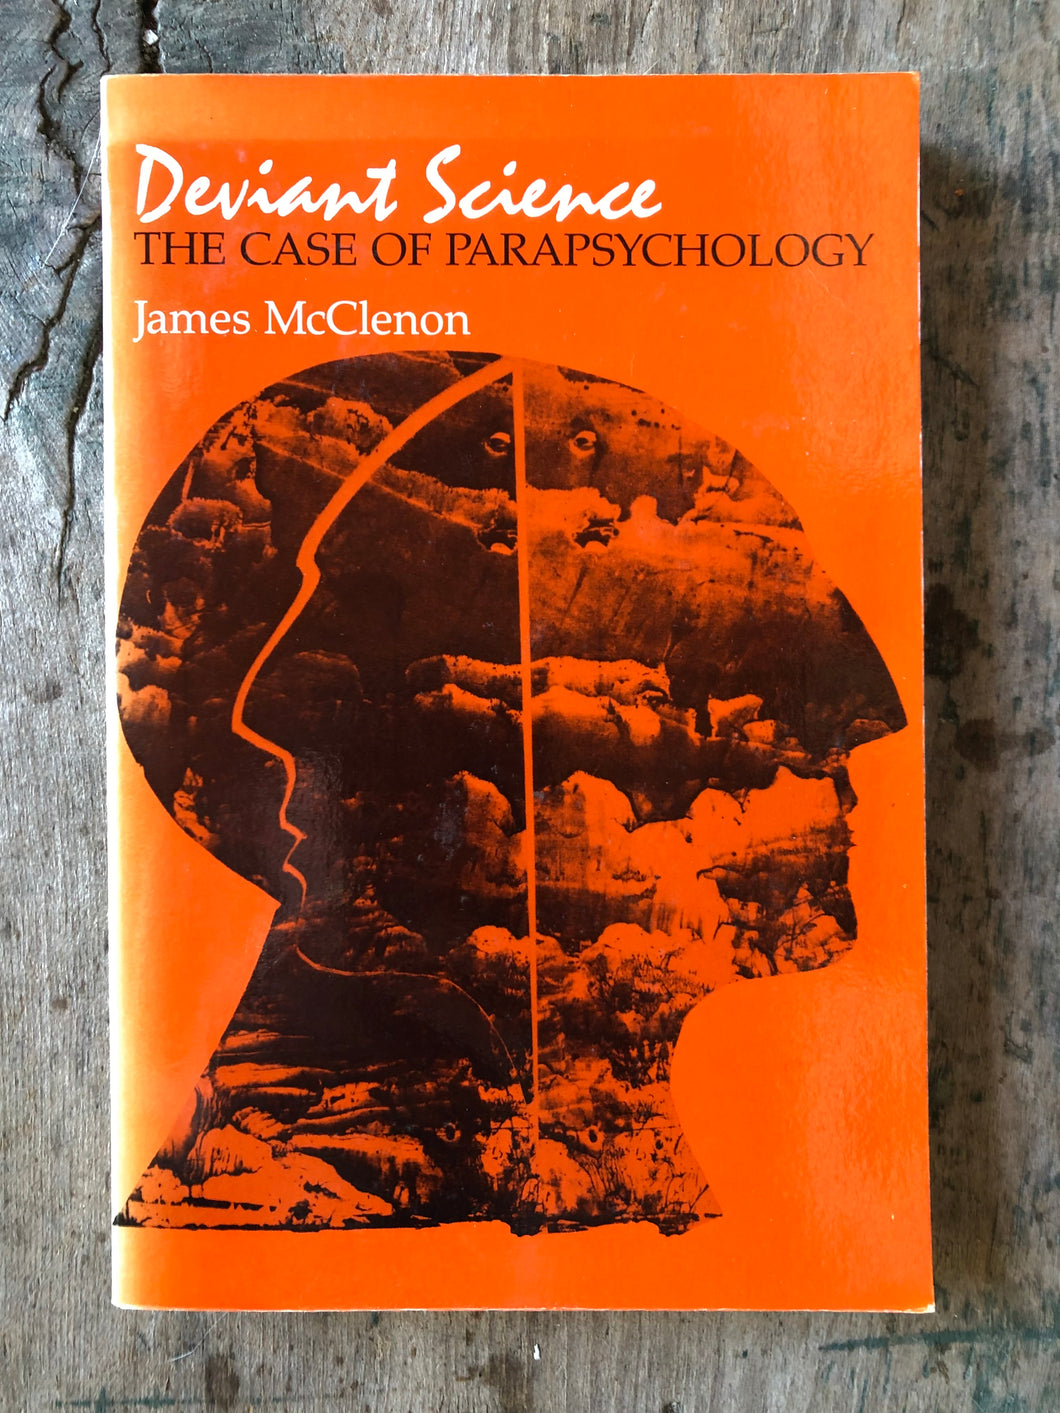 Deviant Science: The Case of Parapsychology. by James McClenon